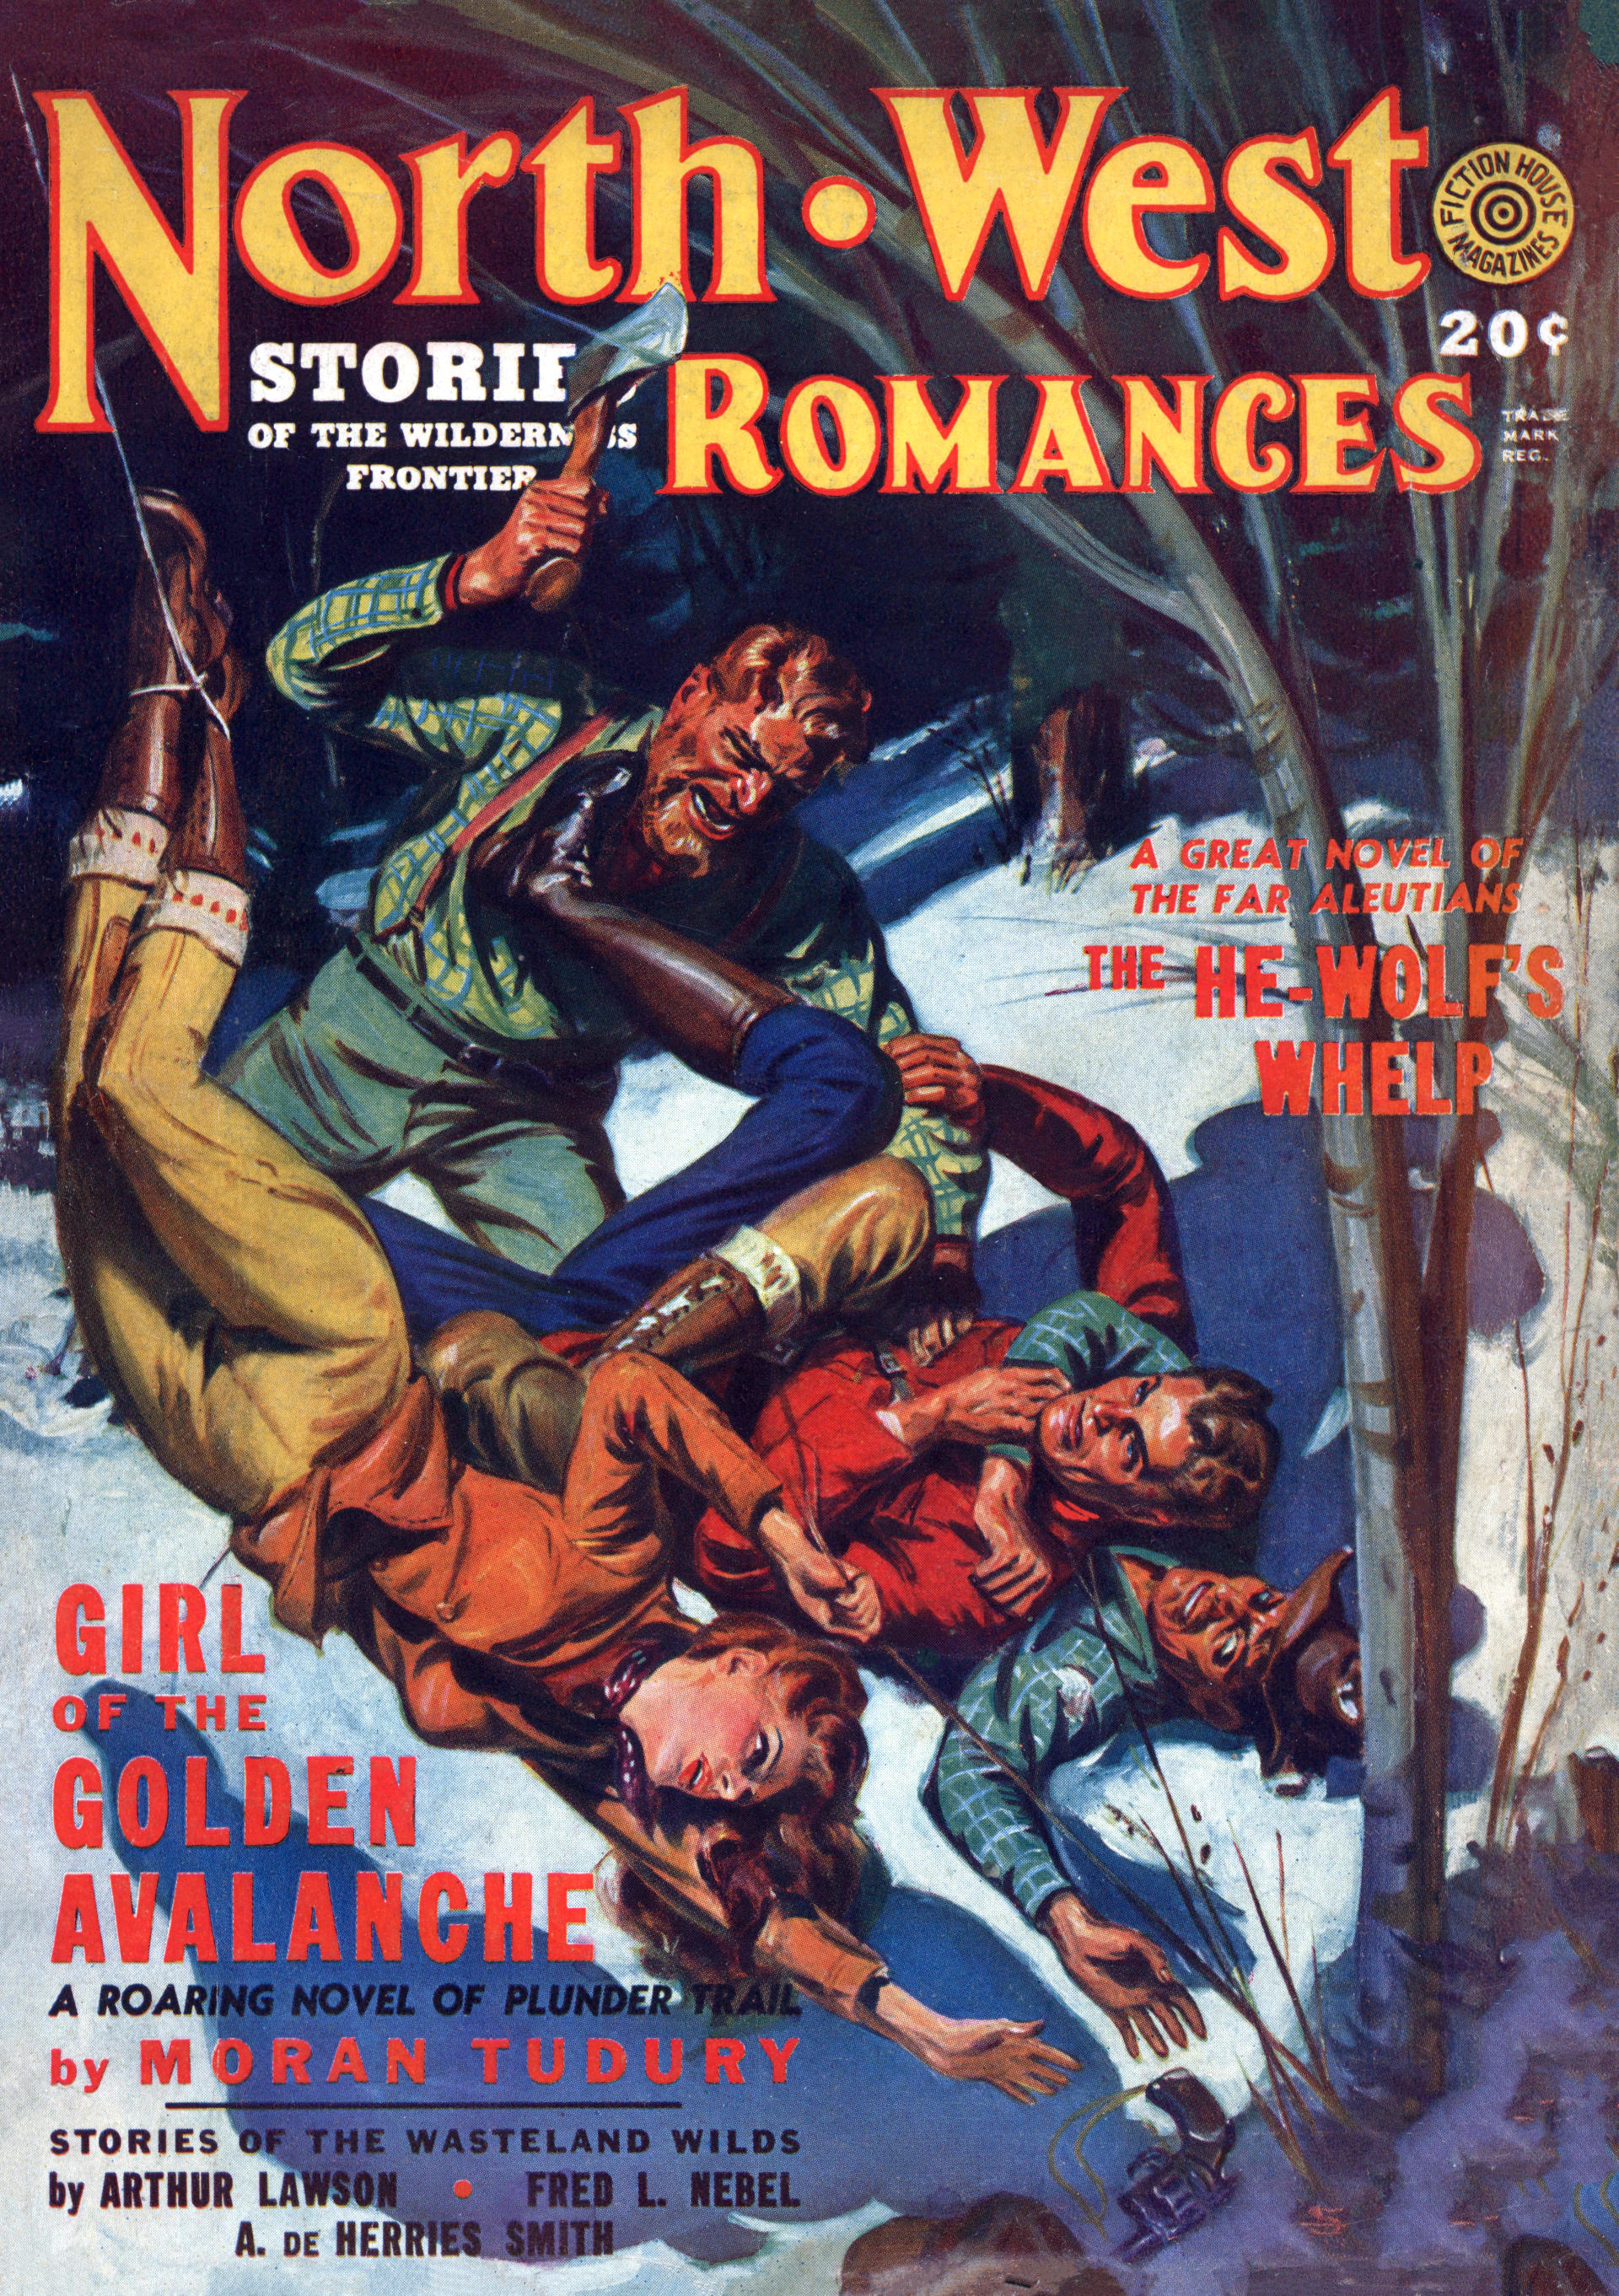 North-West Romances February 1943